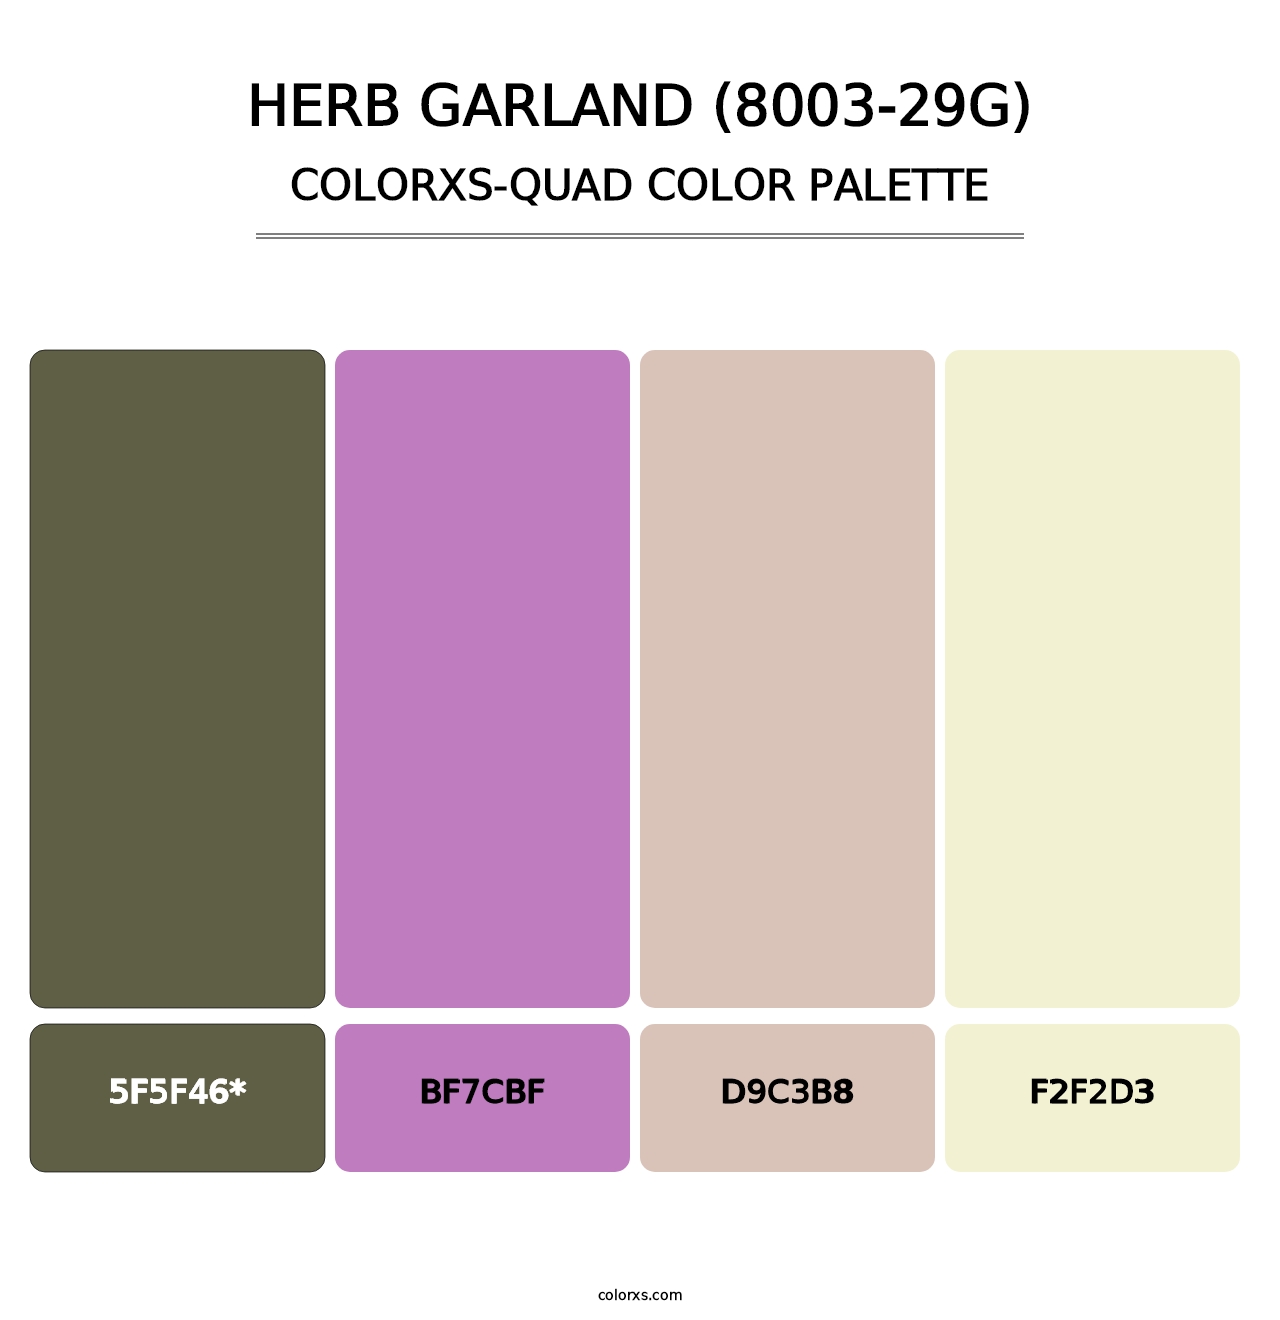 Herb Garland (8003-29G) - Colorxs Quad Palette